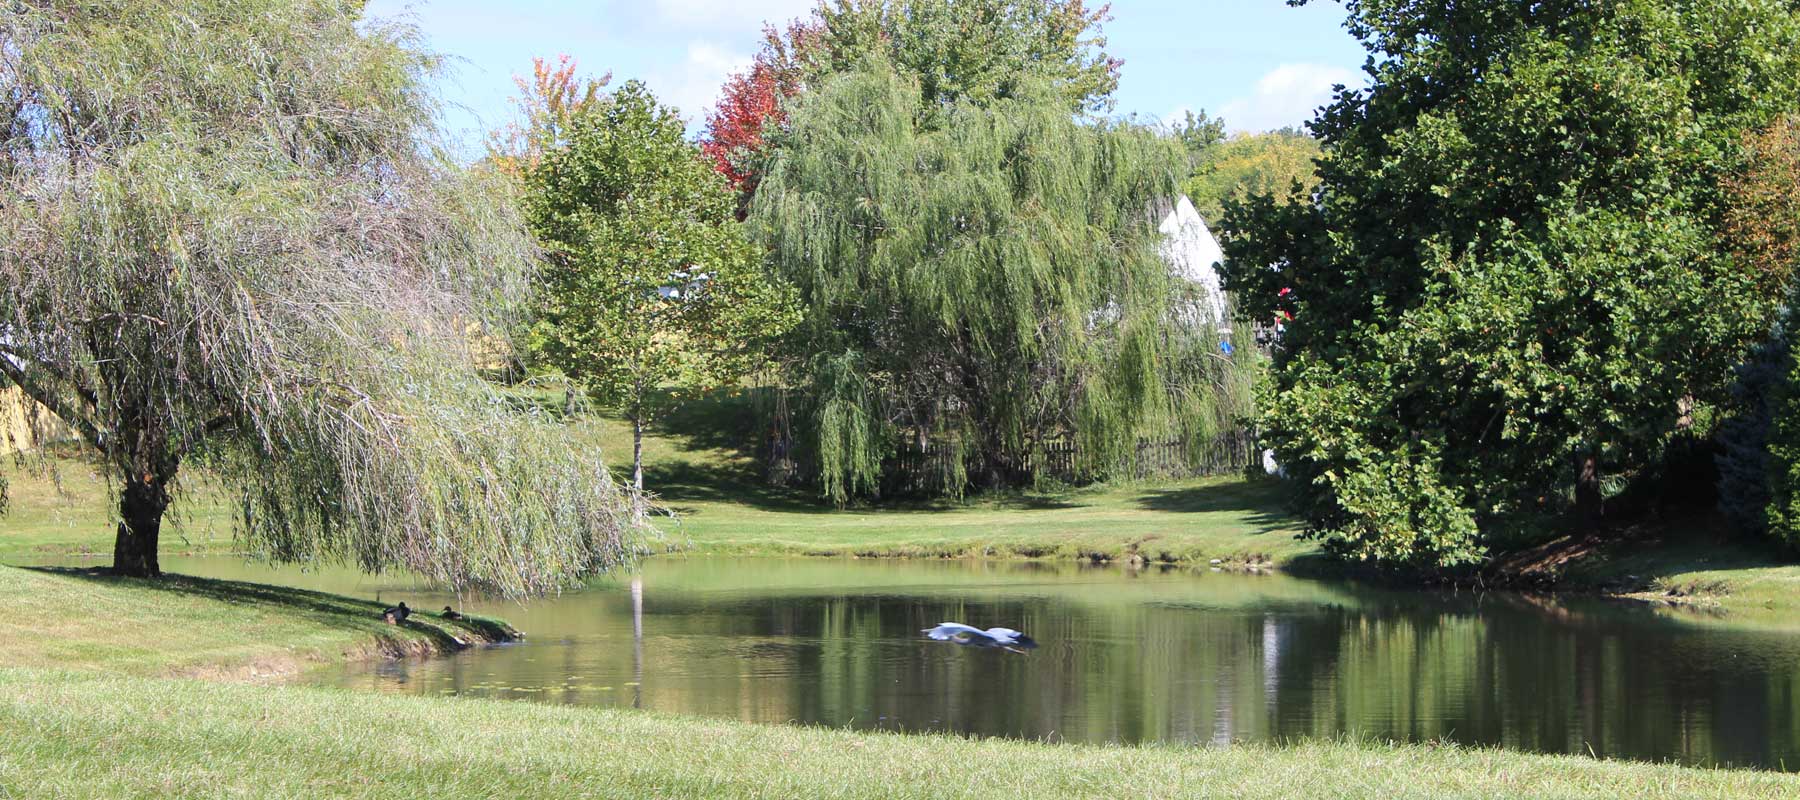 Pond with birds in Gateway, Dayton OH